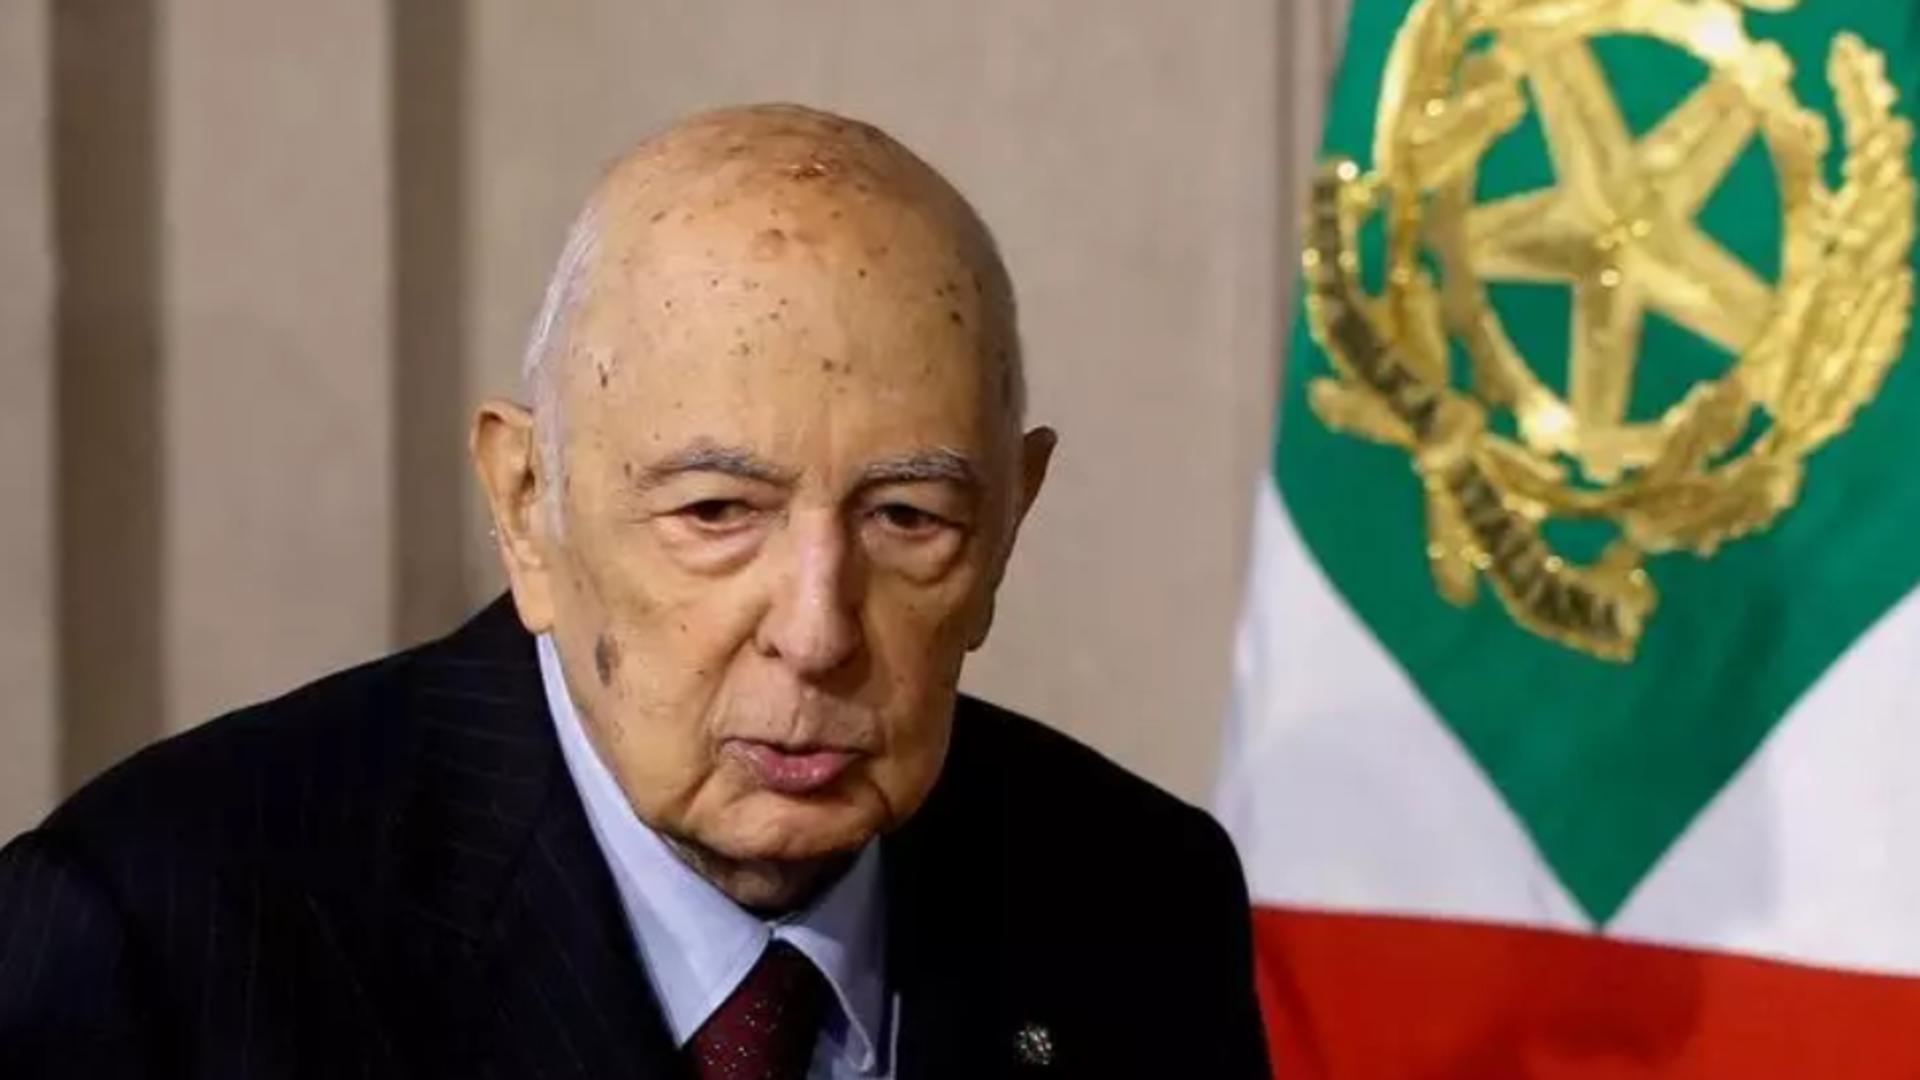  A murit fostul preşedinte italian Giorgio Napolitano. El avea 98 de ani 